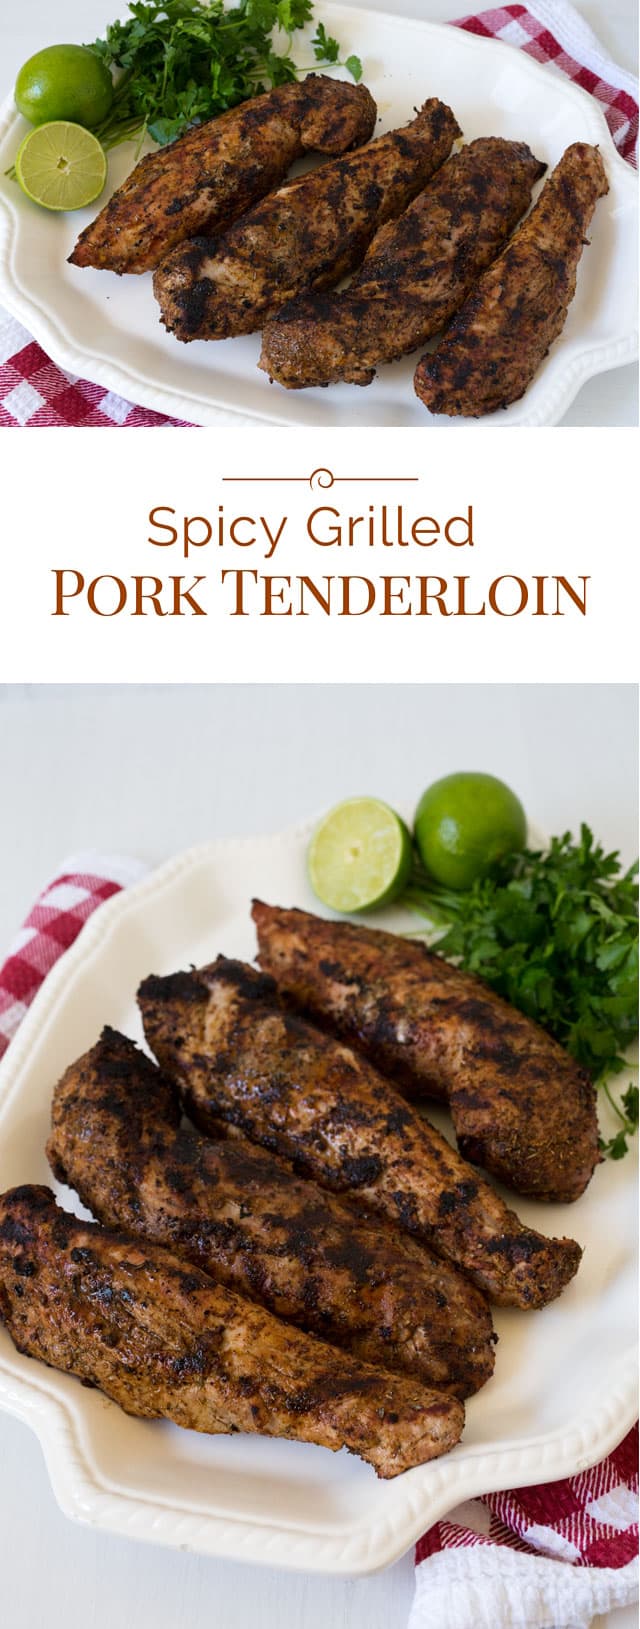 Spicy-Grilled-Pork-Tenderloin-Collage-Barbara-Bakes